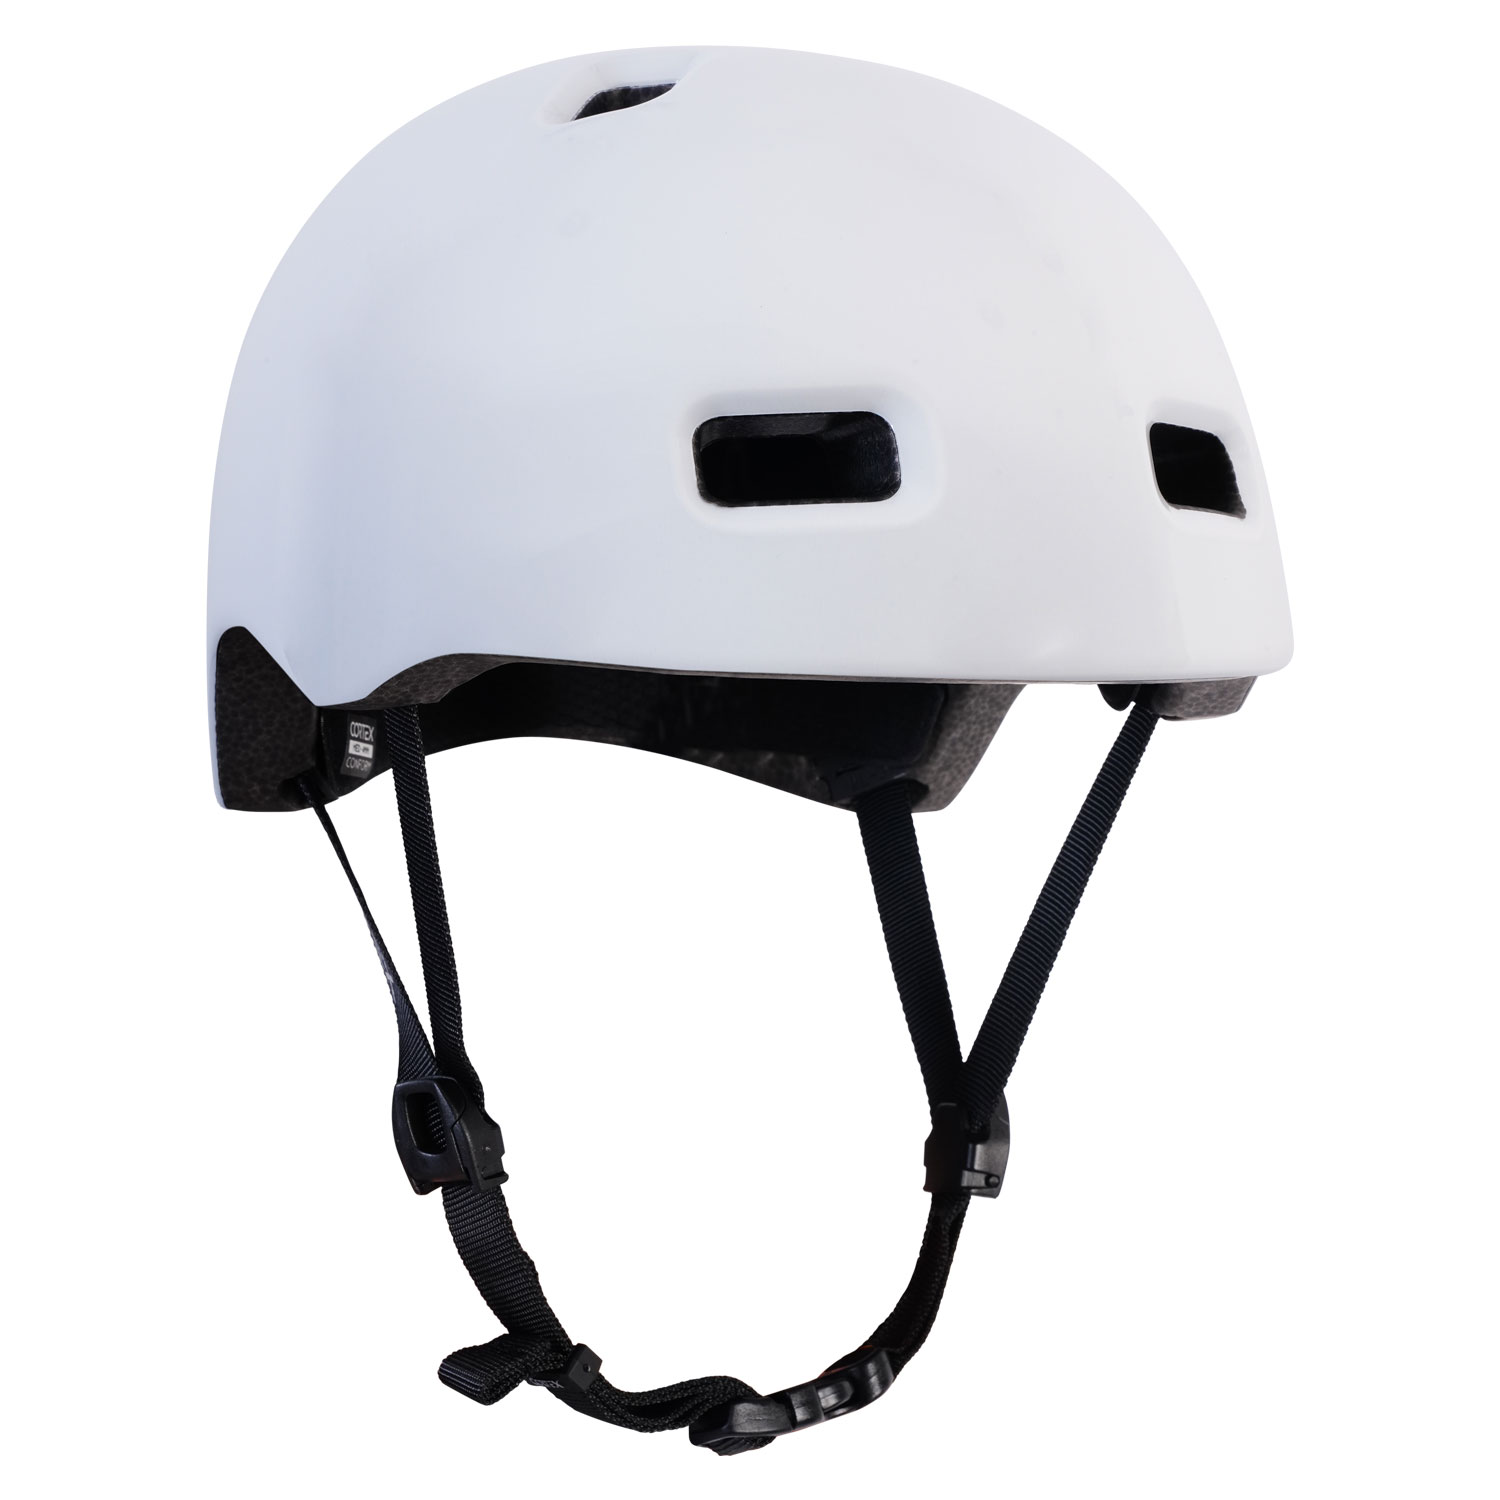 Cortex Multi Sport Helm glanz Weiß in S, M, L